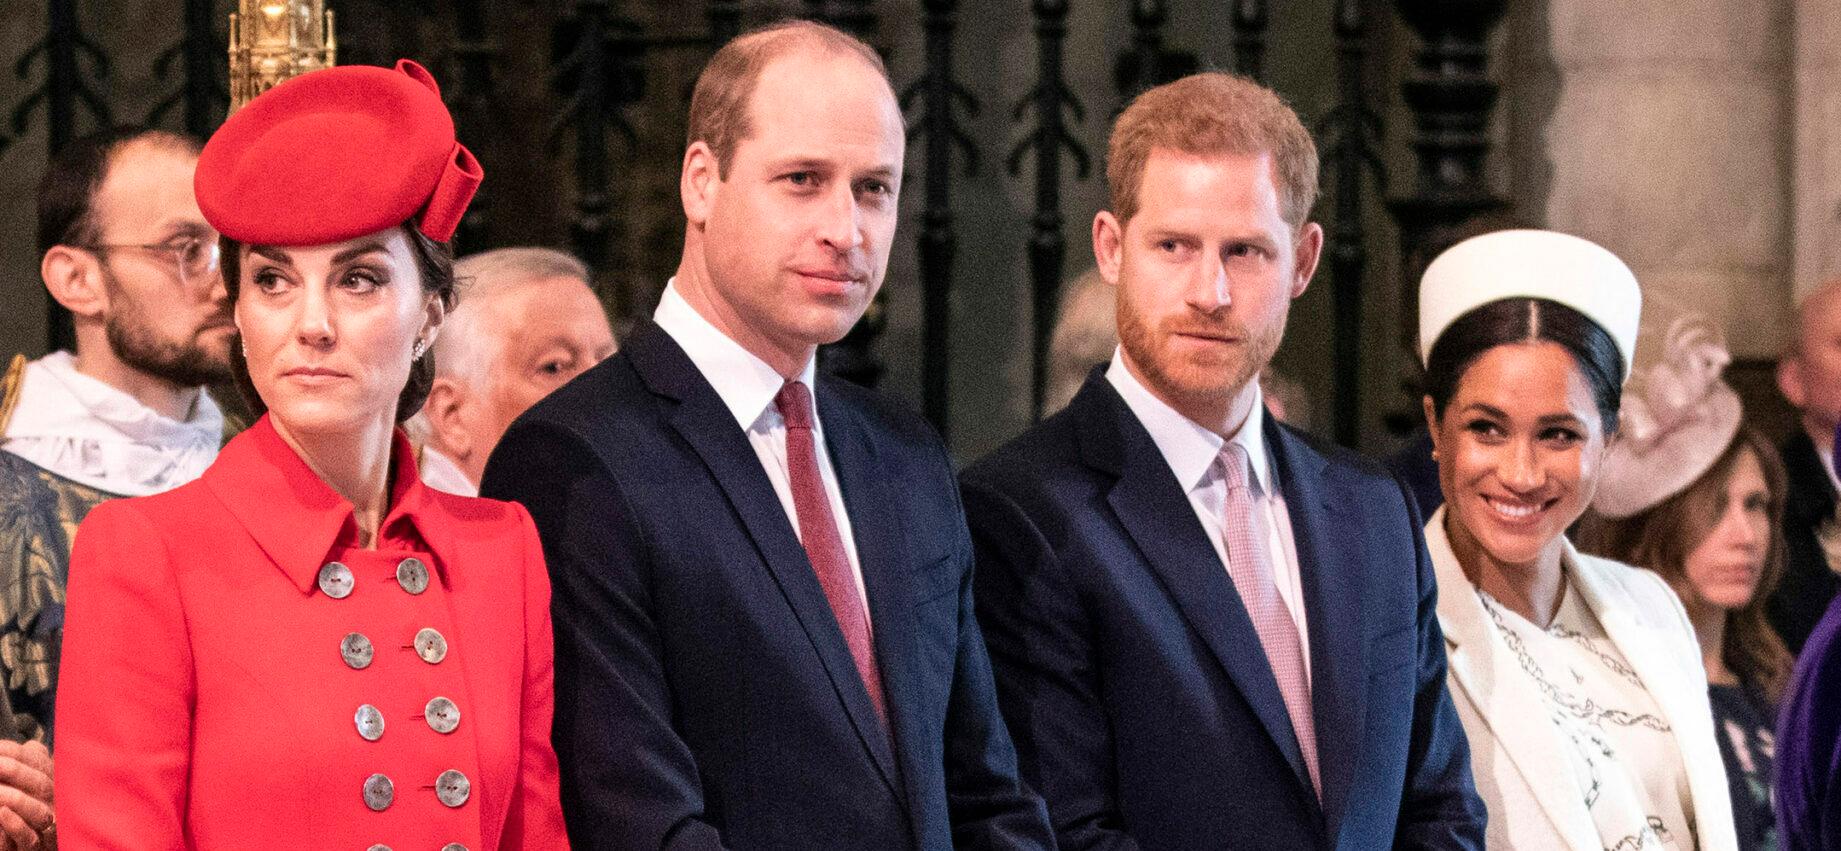 Royal Family Snubs Princess Lilibet’s Christening Despite Invite From Harry & Meghan